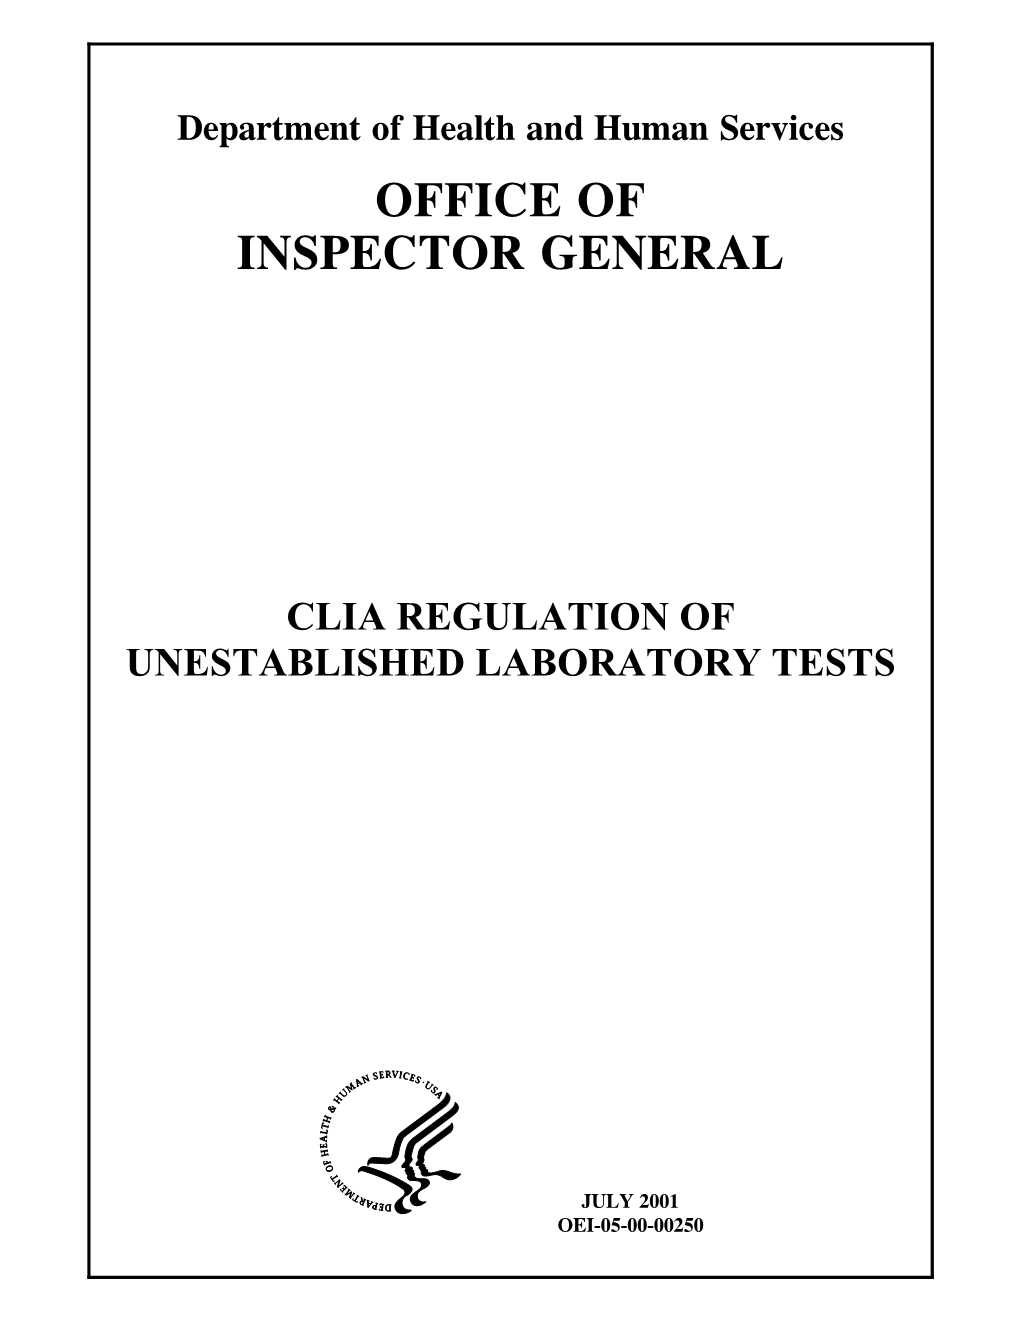 CLIA Regulation of Unestablished Laboratory Tests (OEI-05-00-00250